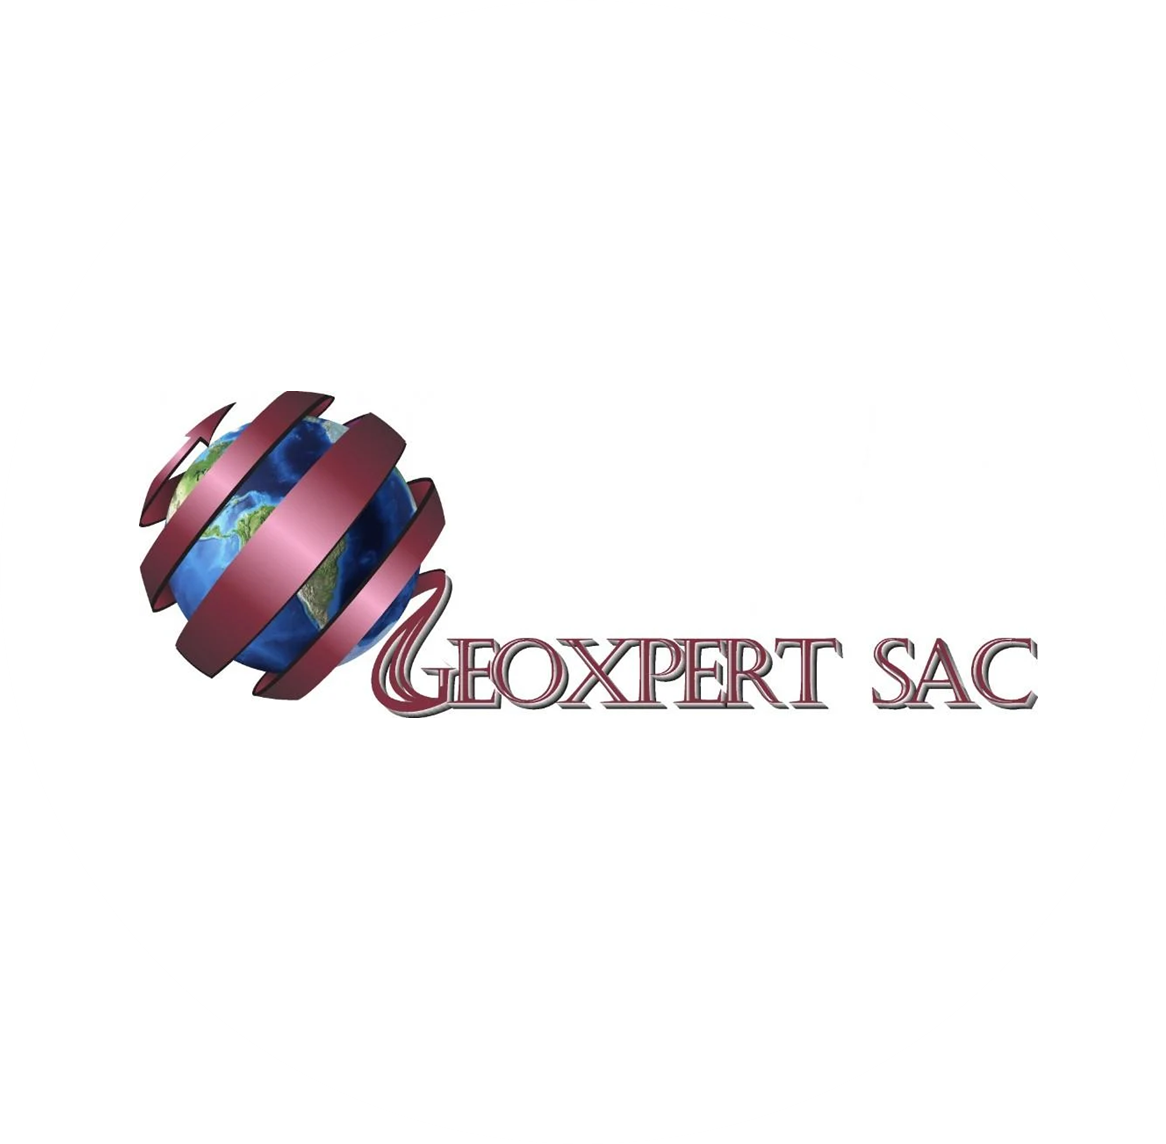 GeoXPert S.A.C.